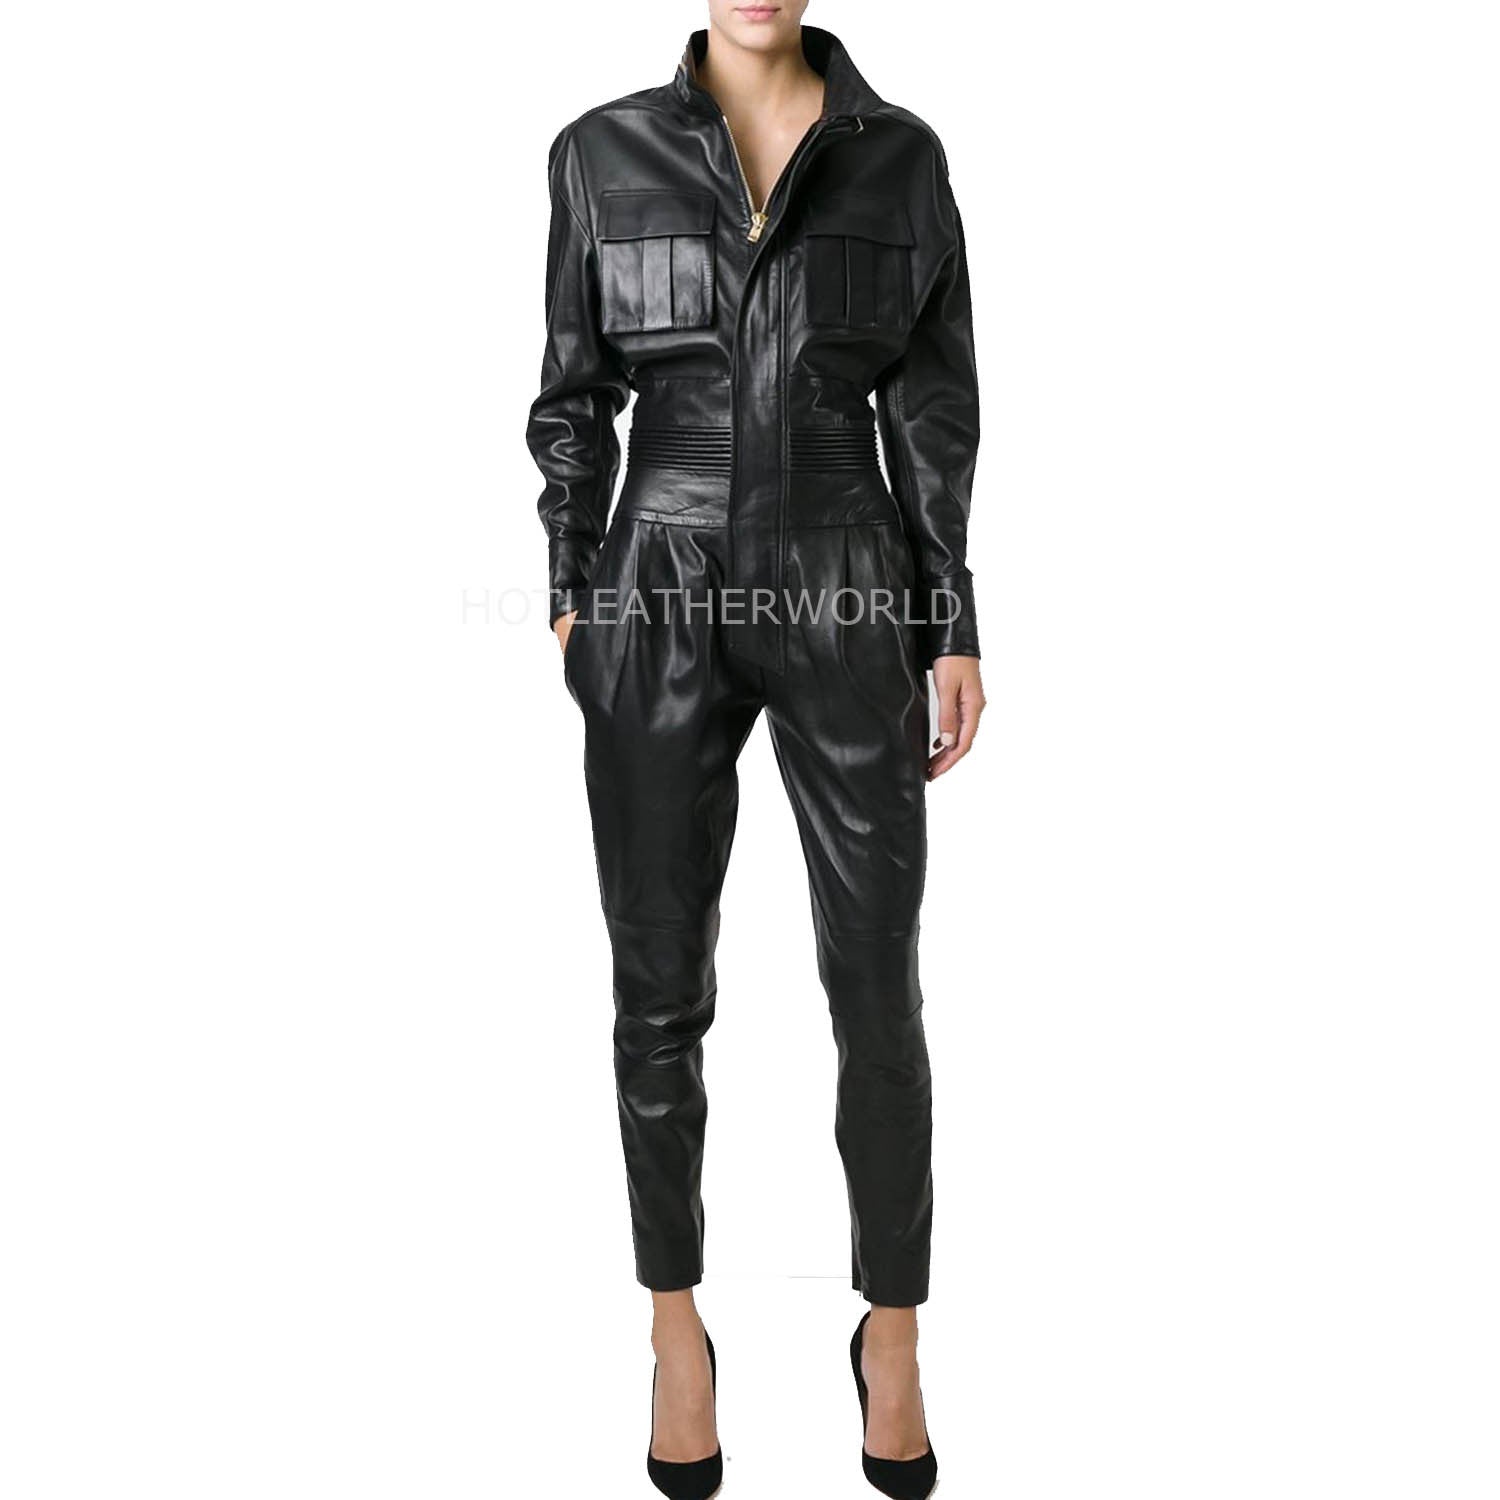 Black Leather Jumpsuit with Zipper